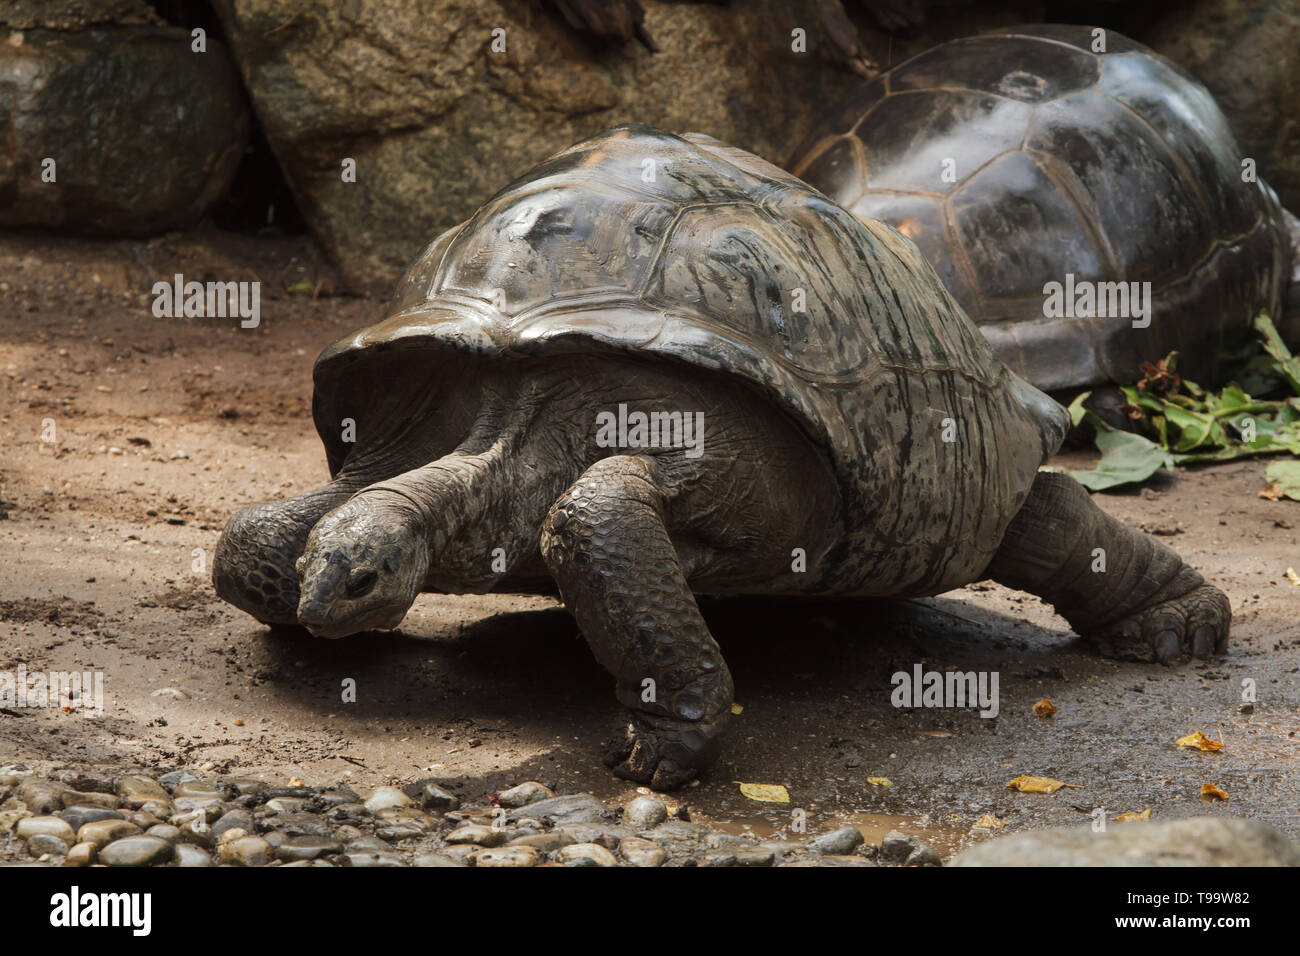 Aldabra giant tortoise (Aldabrachelys gigantea). Wildlife animal. Stock Photo